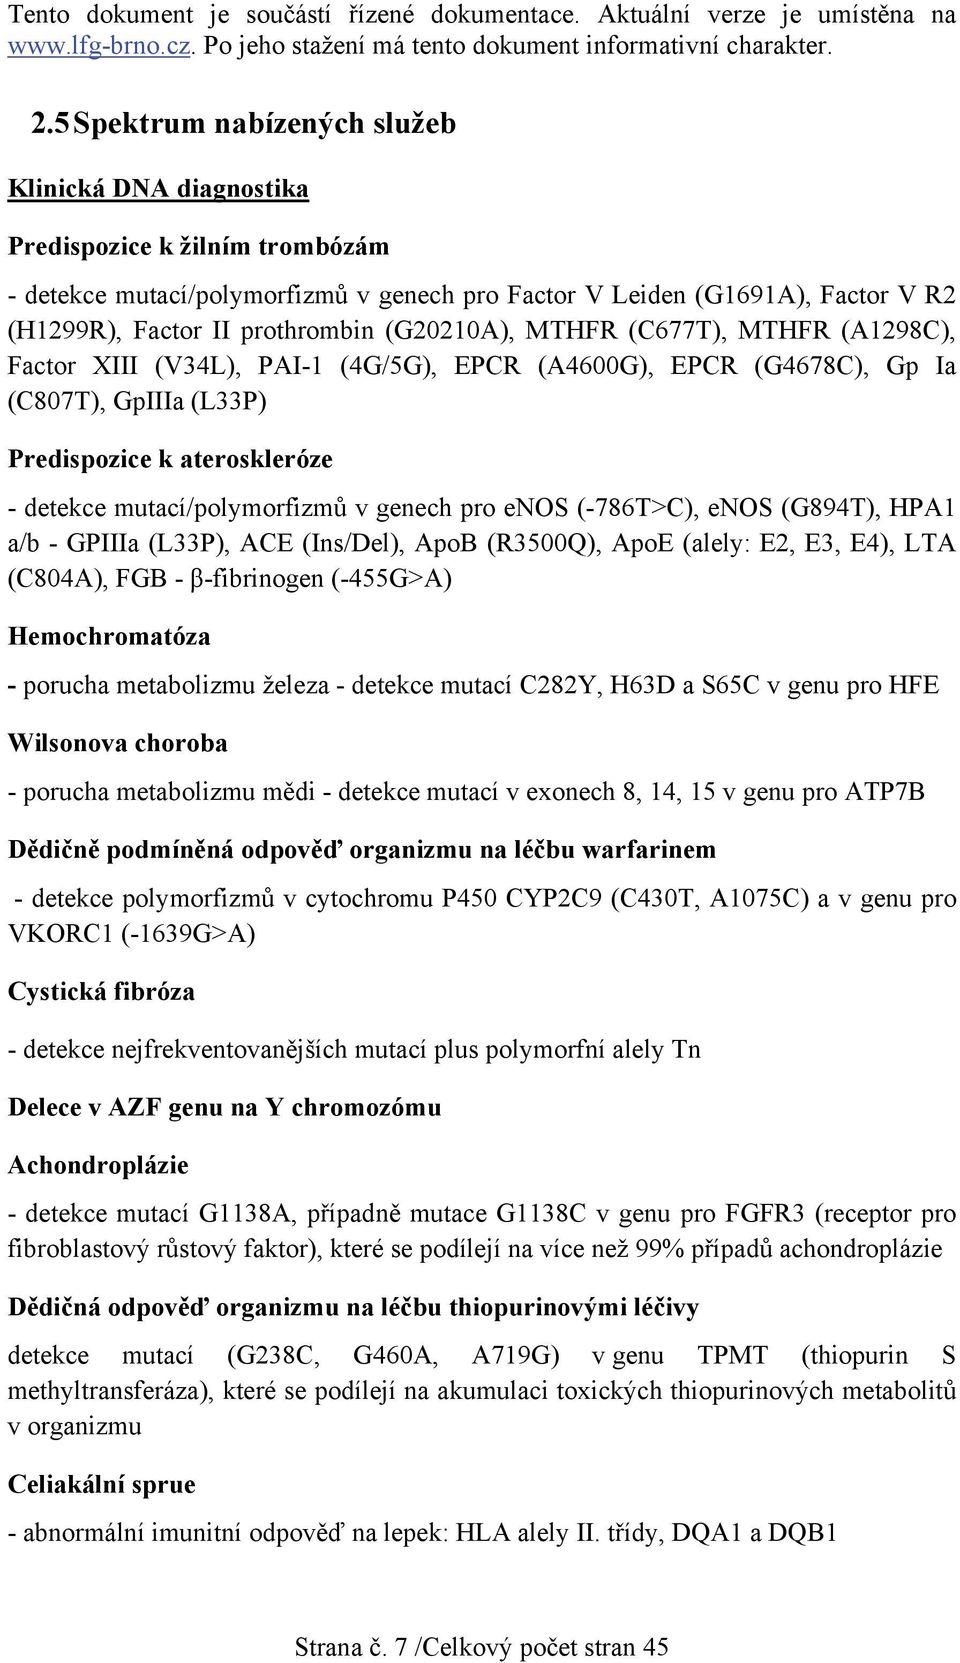 mutací/polymorfizmů v genech pro enos (-786T>C), enos (G894T), HPA1 a/b - GPIIIa (L33P), ACE (Ins/Del), ApoB (R3500Q), ApoE (alely: E2, E3, E4), LTA (C804A), FGB - β-fibrinogen (-455G>A)